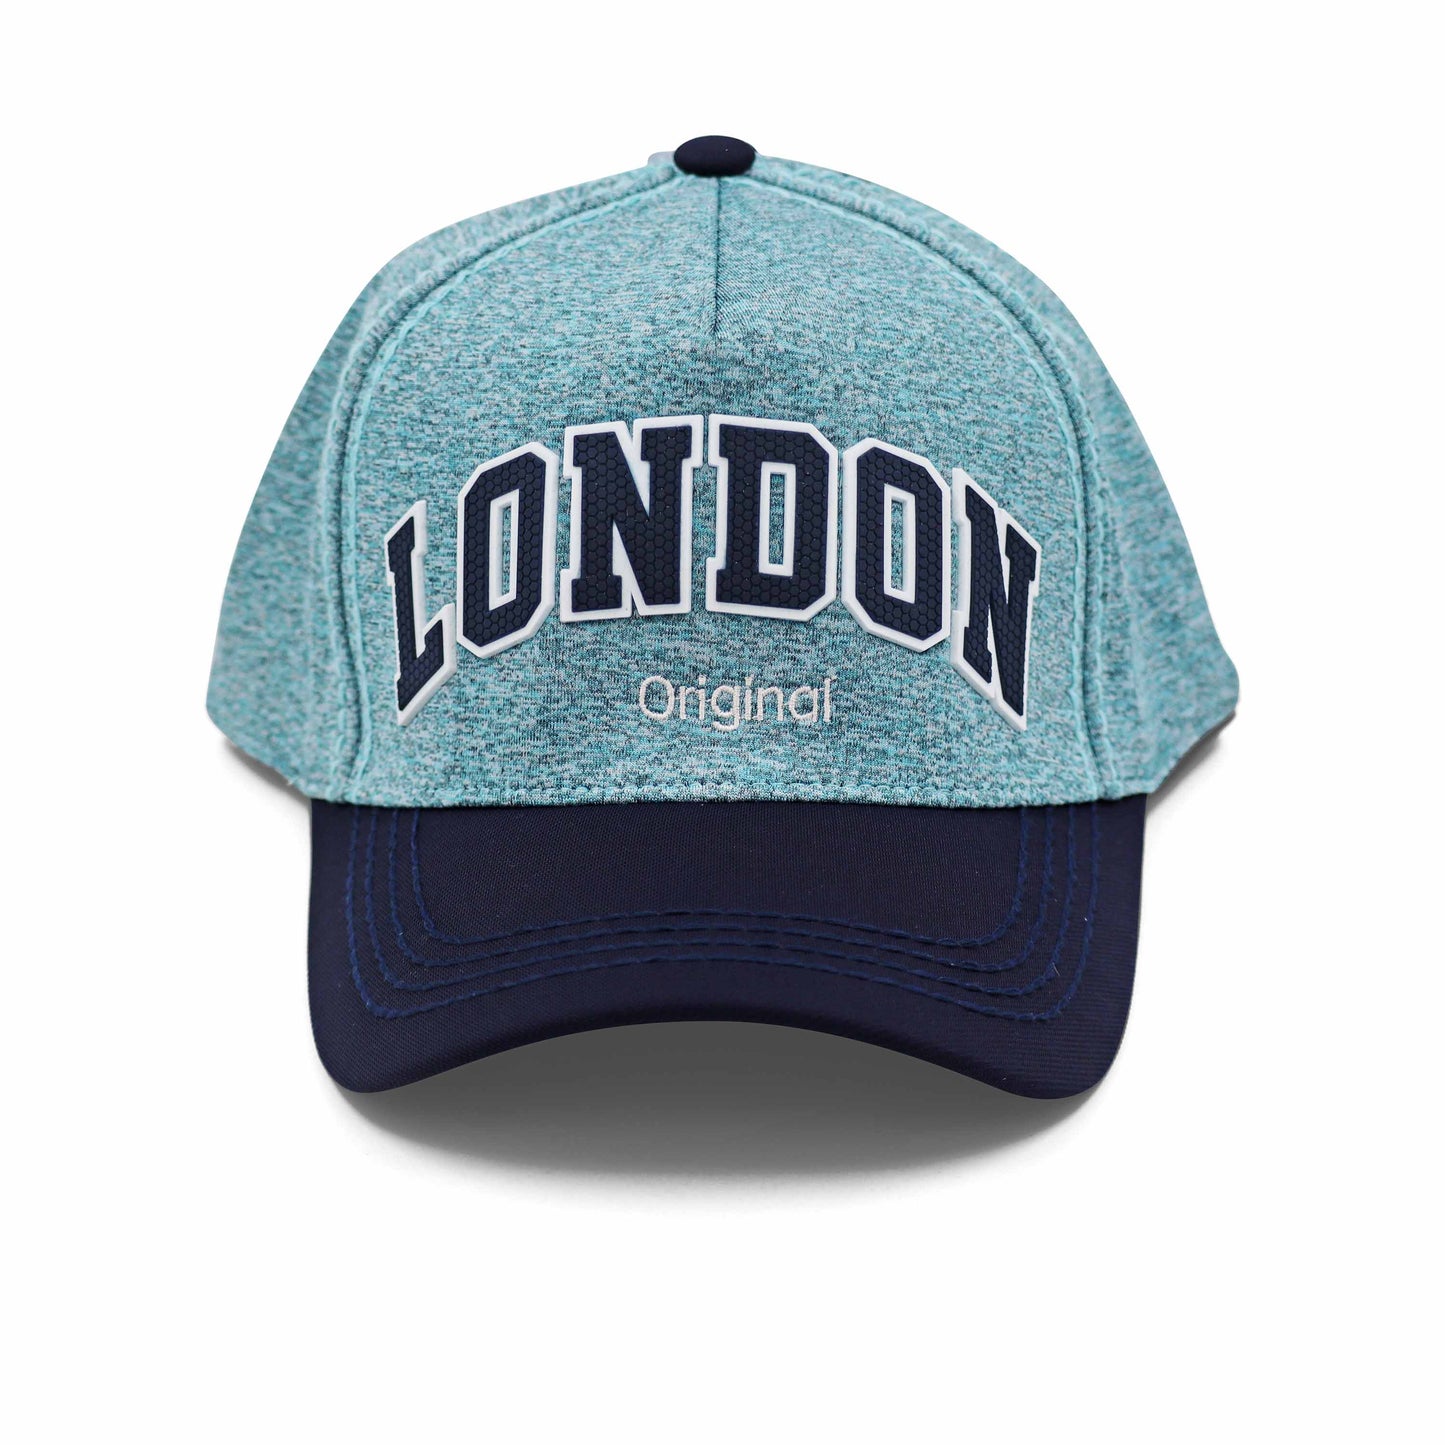 Siro London 3D Embroidery Original Cap - Baby Blue - London Souvenir Cap